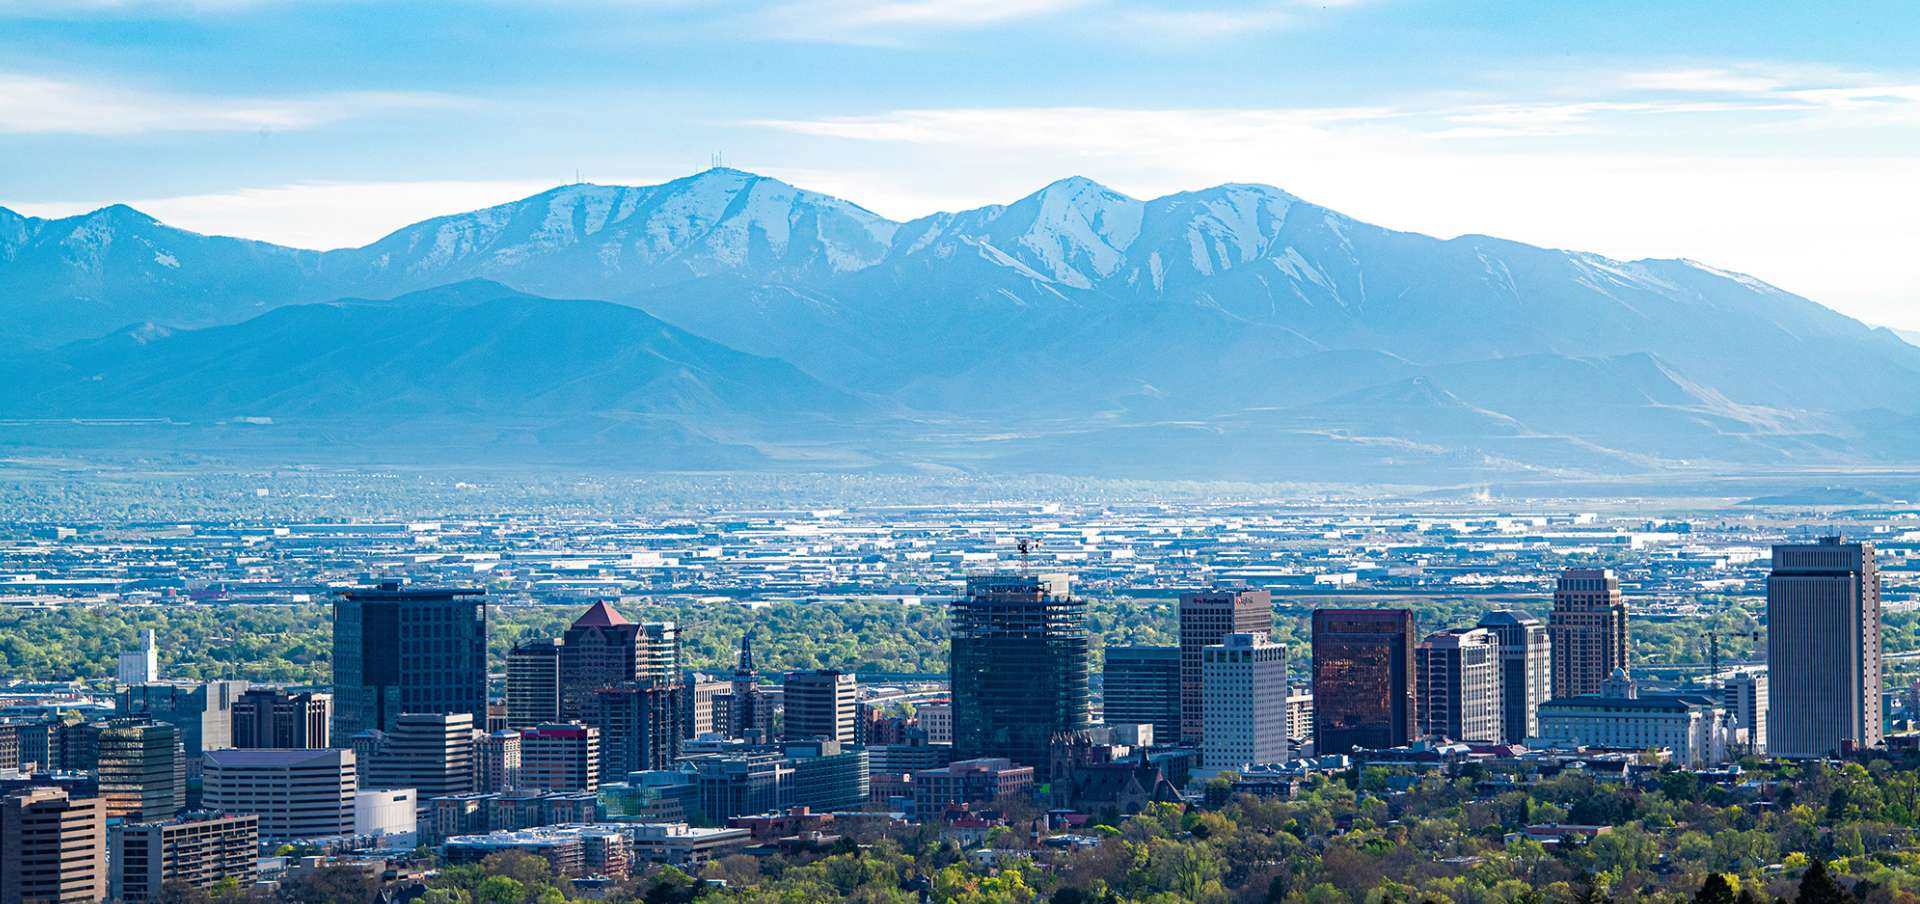 Landscape view of Salt Lake City